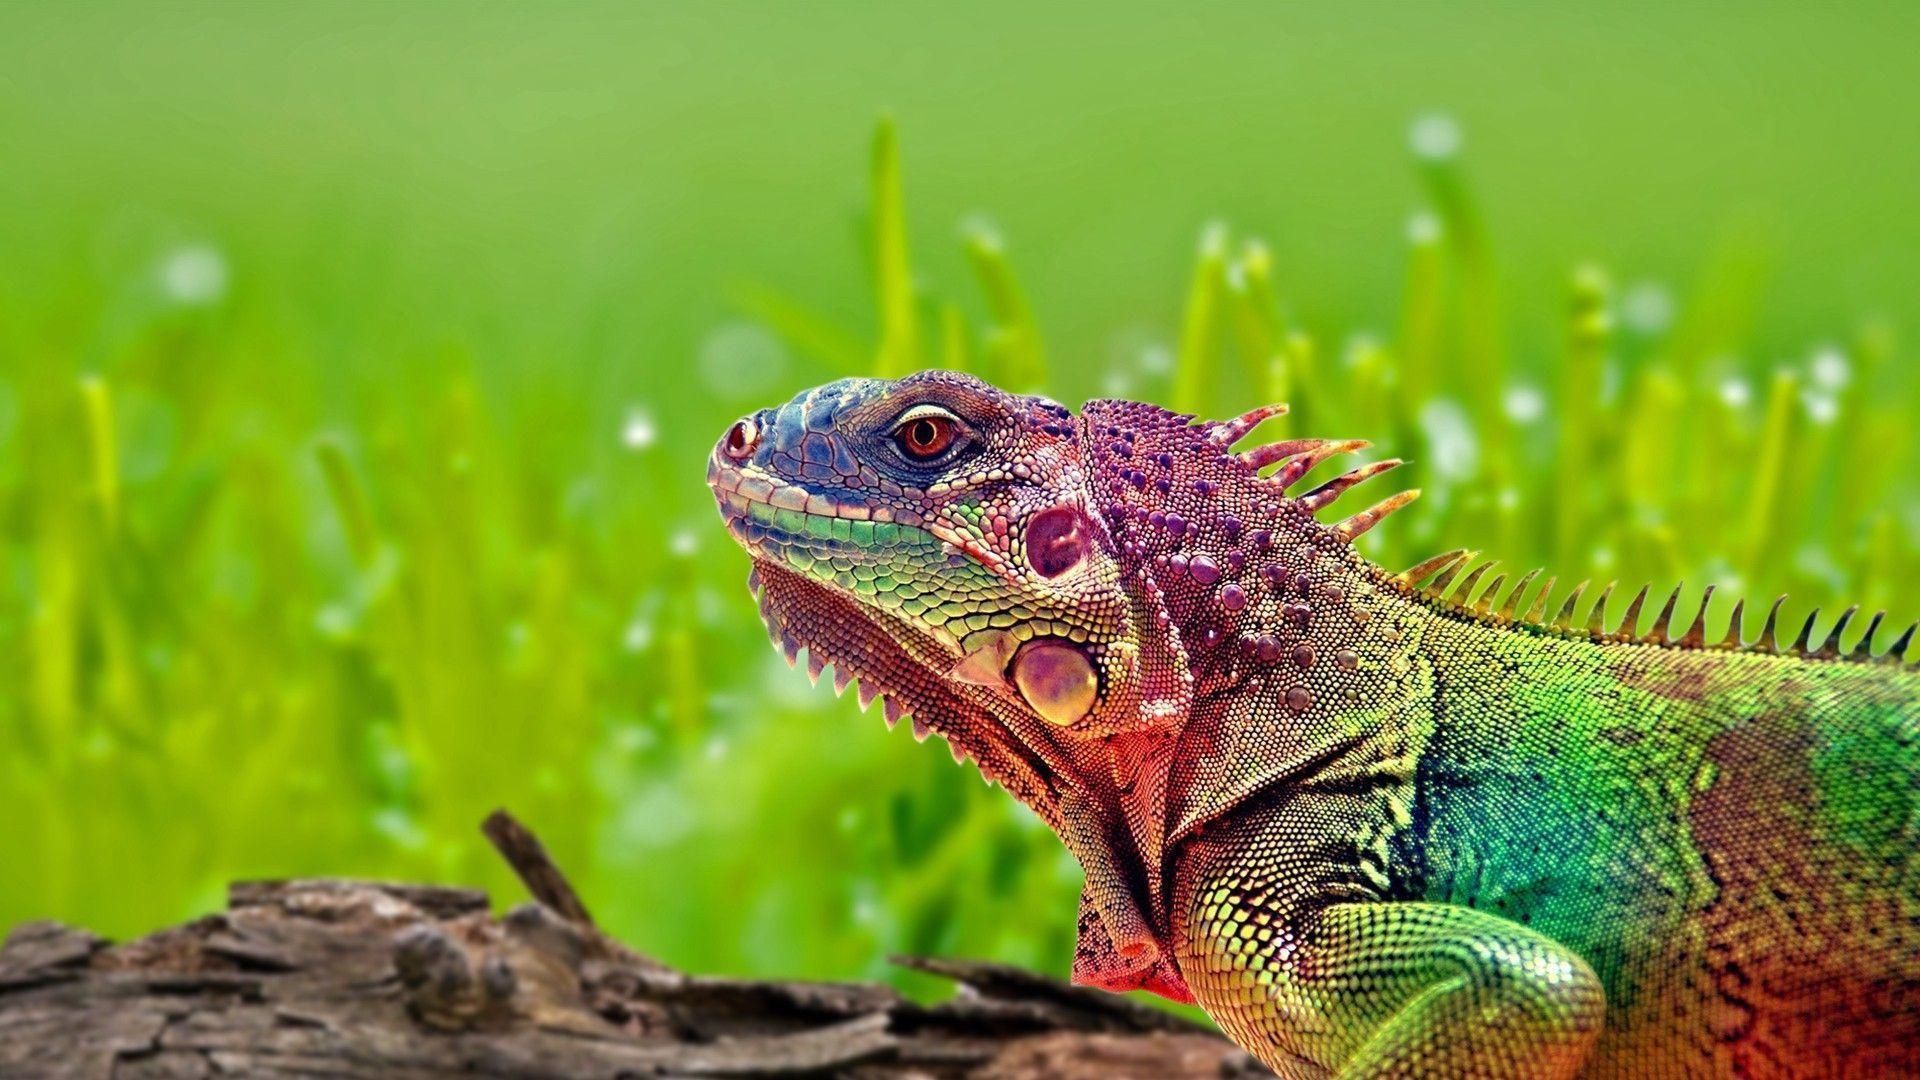 Colorful Lizard Wallpaper 15386 1920x1080 px